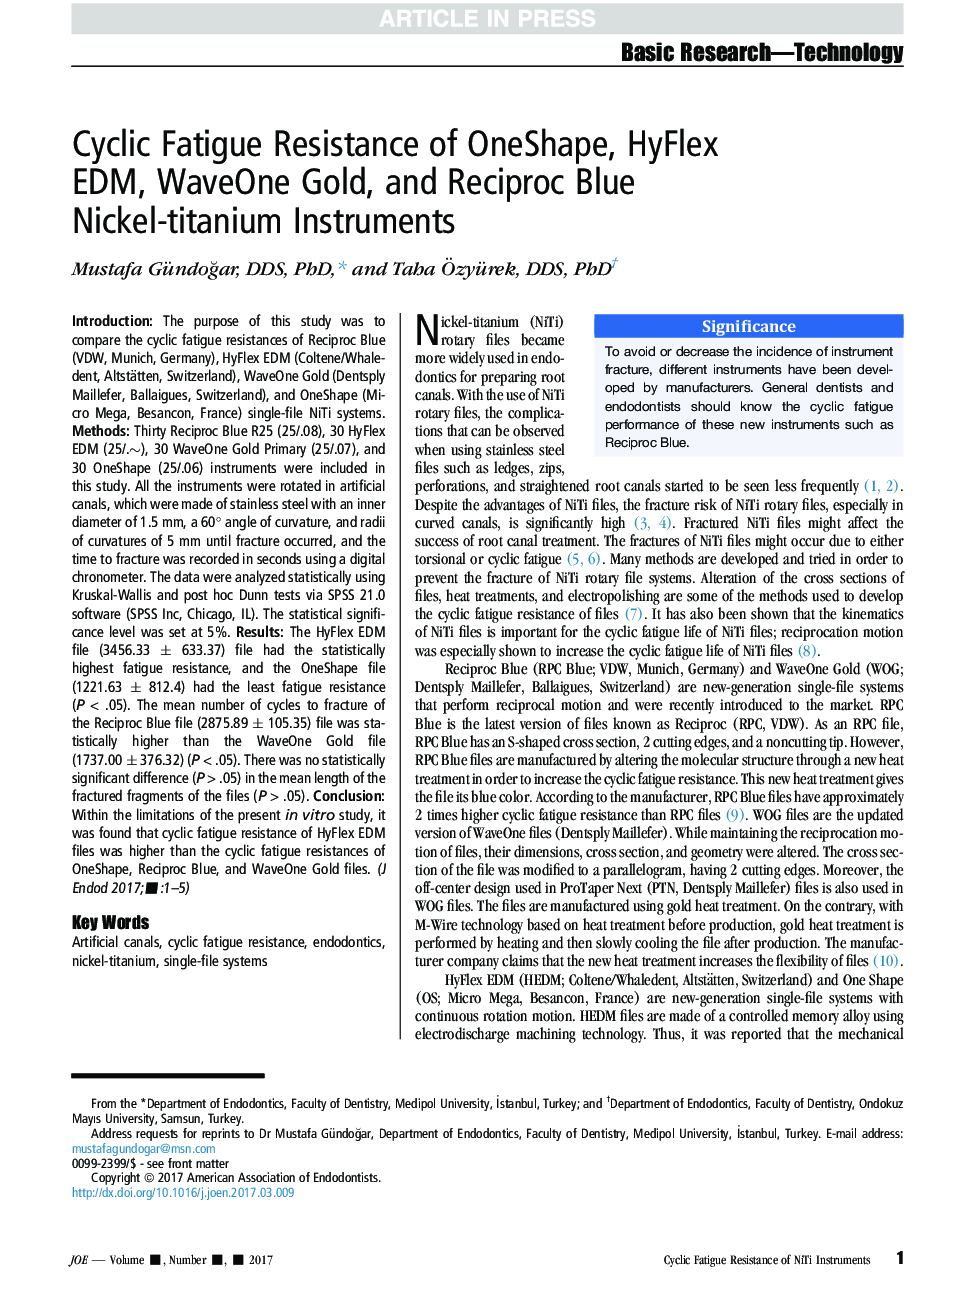 Cyclic Fatigue Resistance of OneShape, HyFlex EDM, WaveOne Gold, and Reciproc Blue Nickel-titanium Instruments